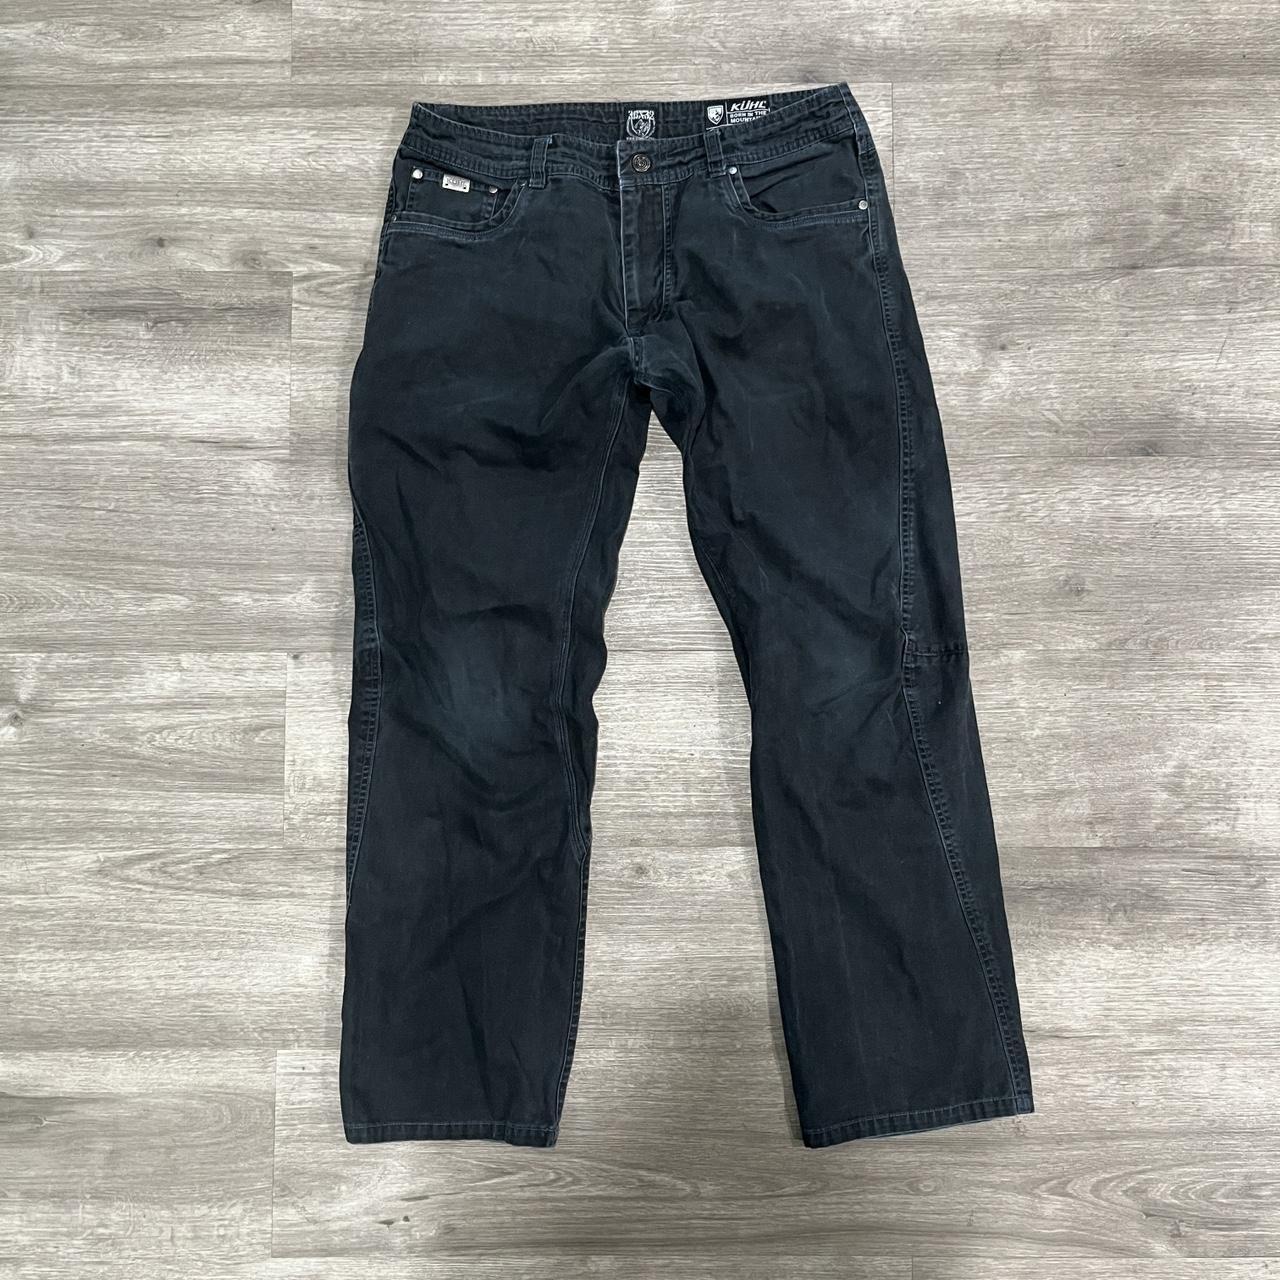 Kuhl Mountain Black Jeans Work Pants Mens... - Depop